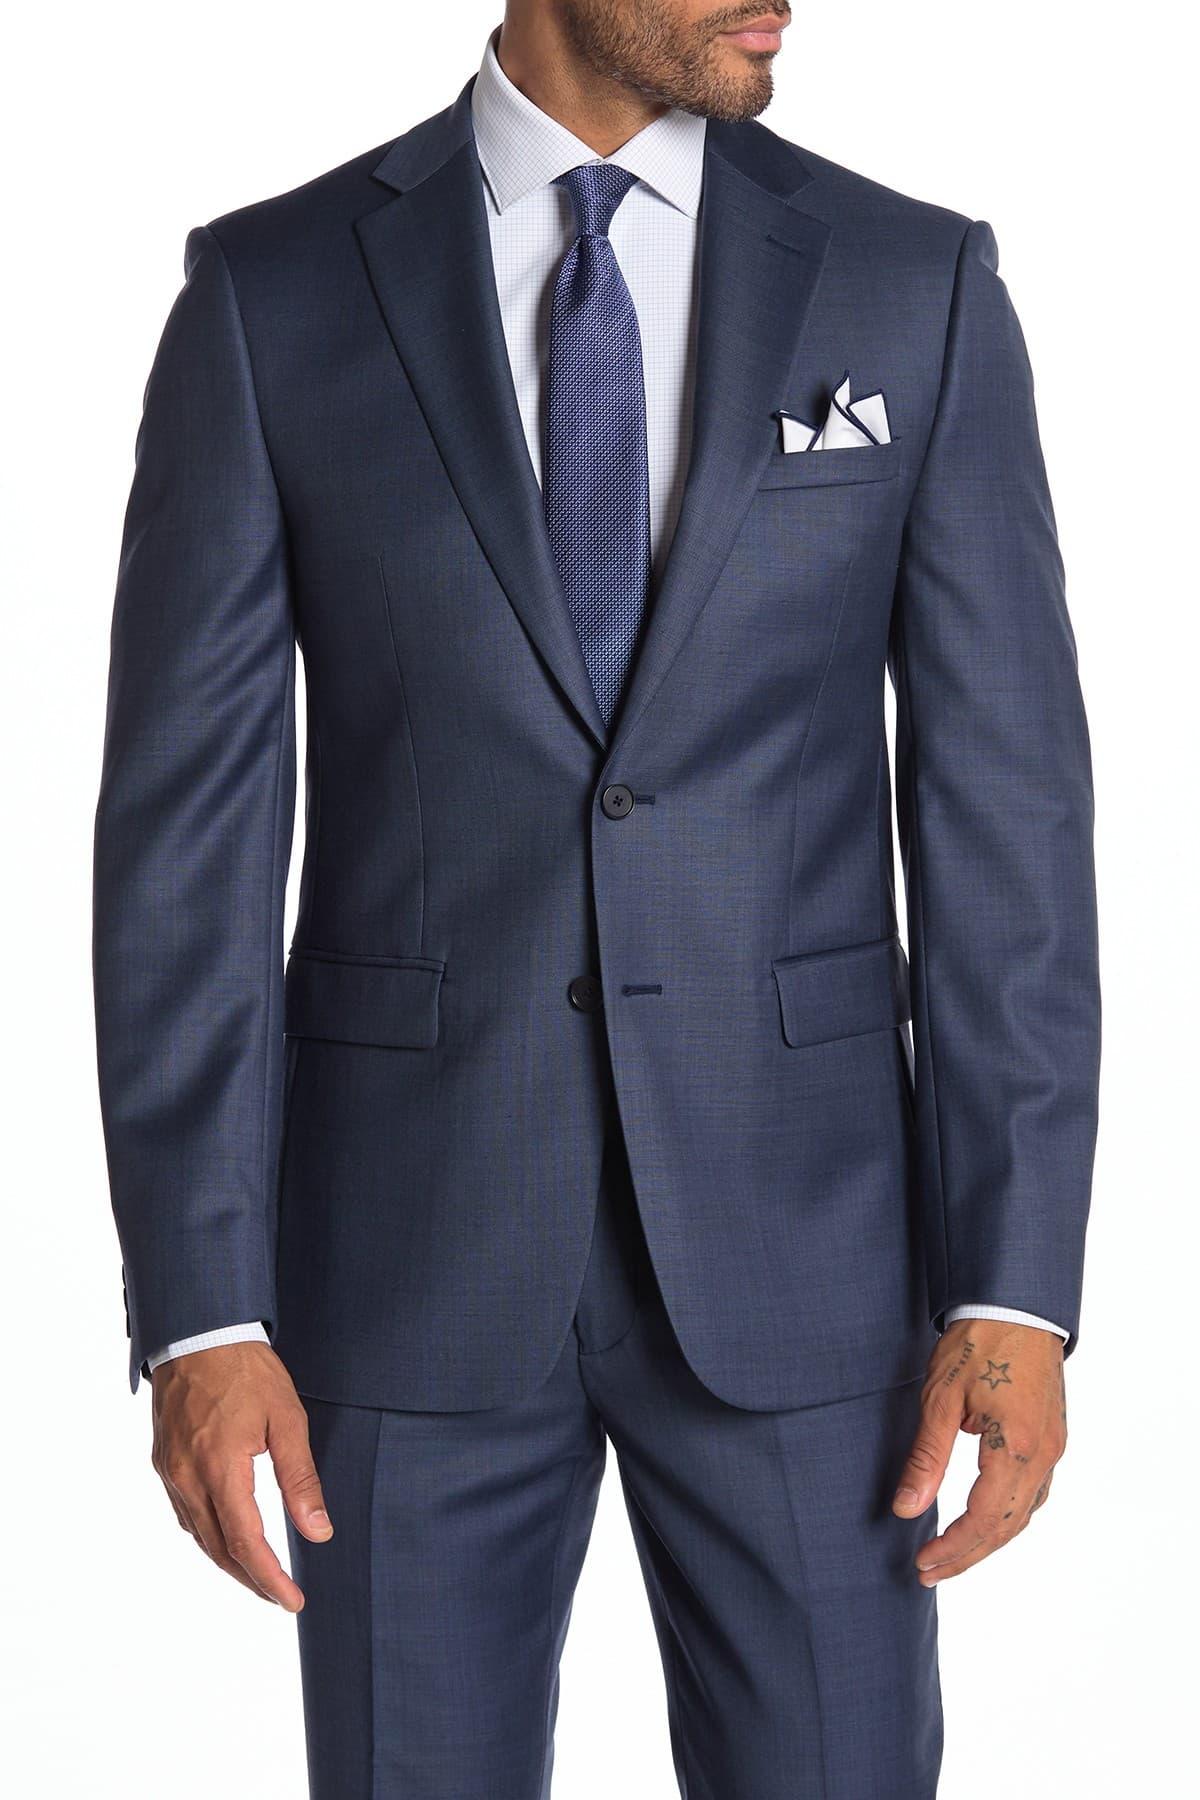 Calvin Klein Wool Malbin Notch Collar Slim Fit Suit Separate Jacket in Blue  for Men - Lyst